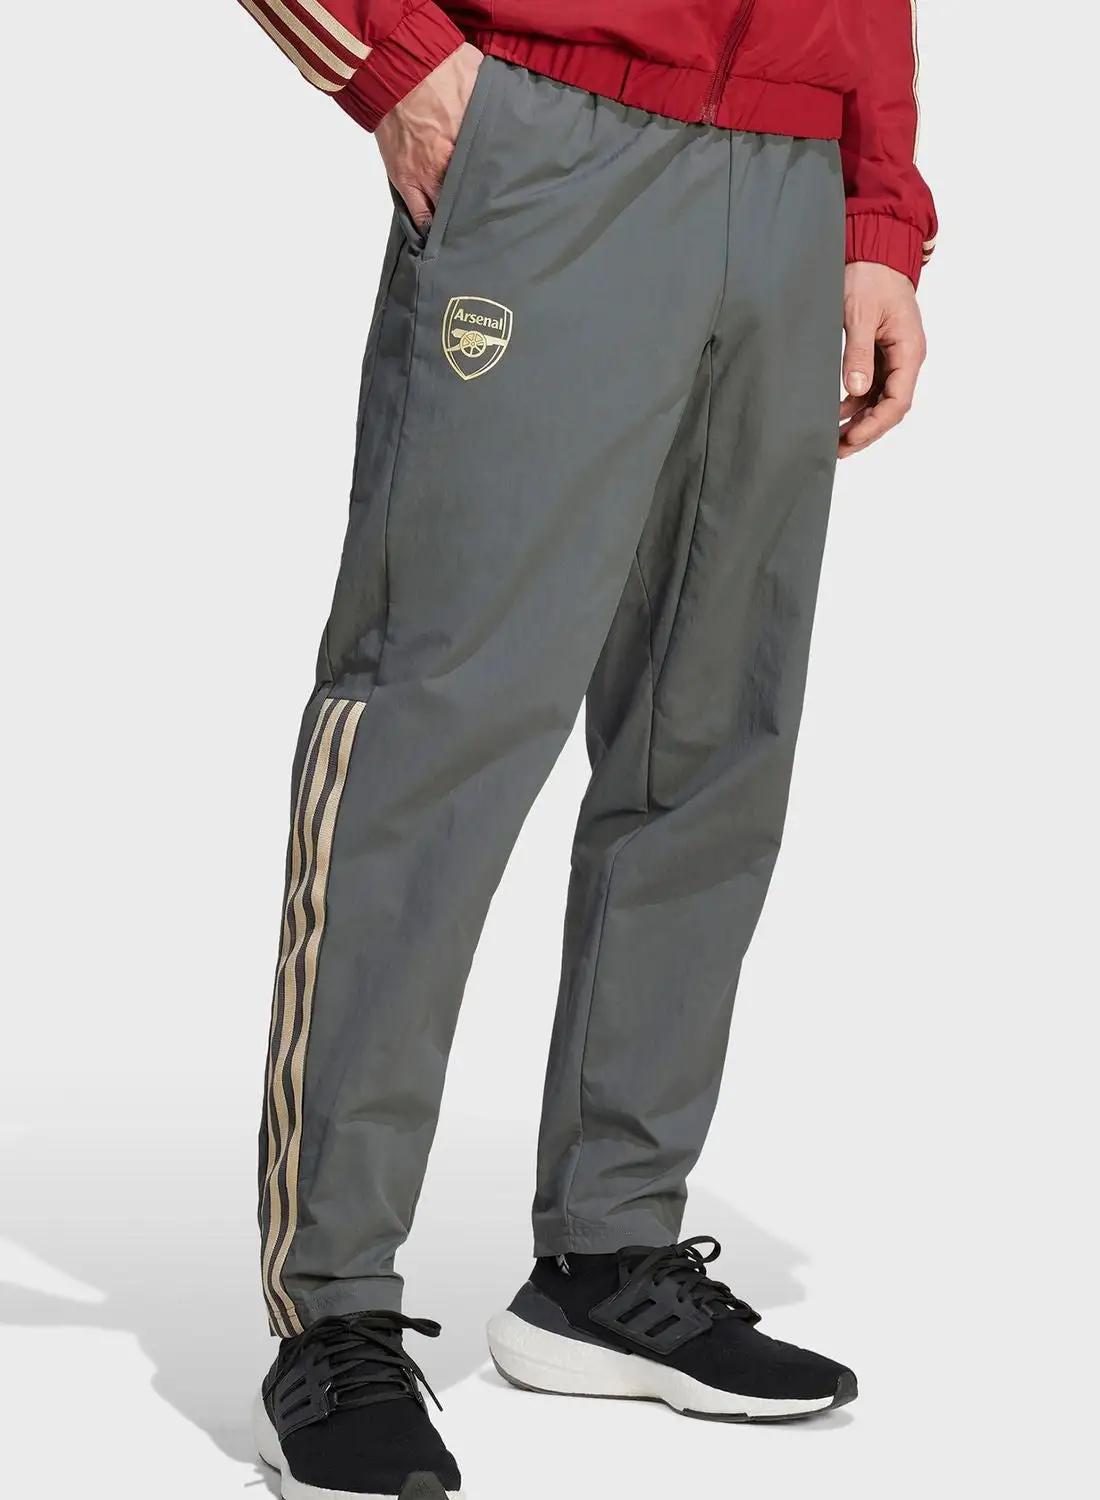 Adidas Arsenal Presentation Pants